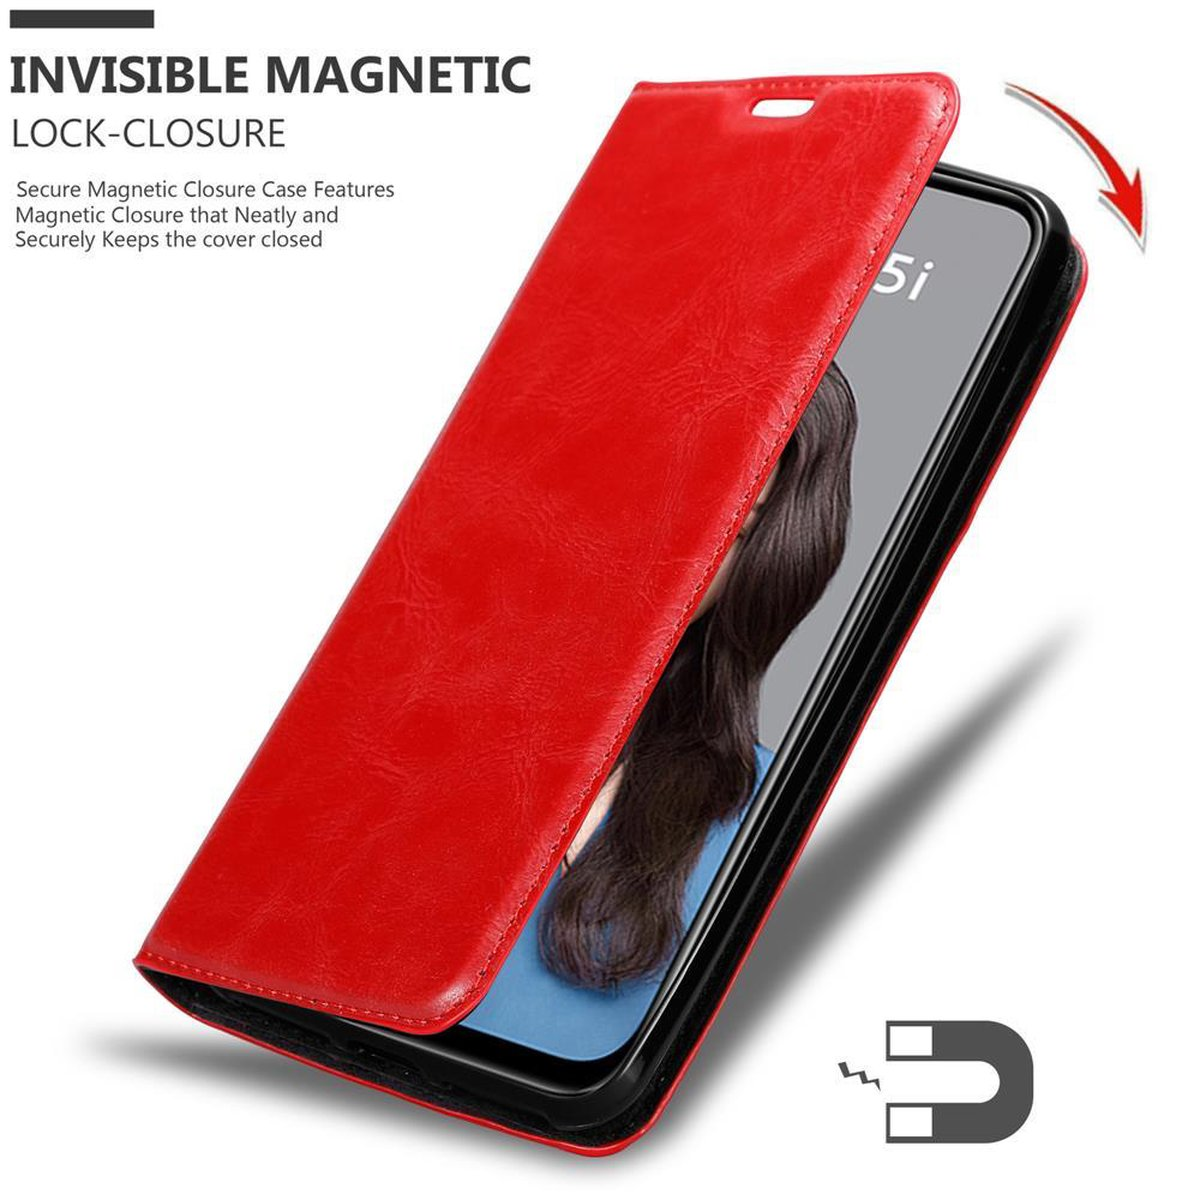 P20 NOVA Hülle LITE ROT APFEL Magnet, 5i Invisible Bookcover, Book 2019, CADORABO / Huawei,